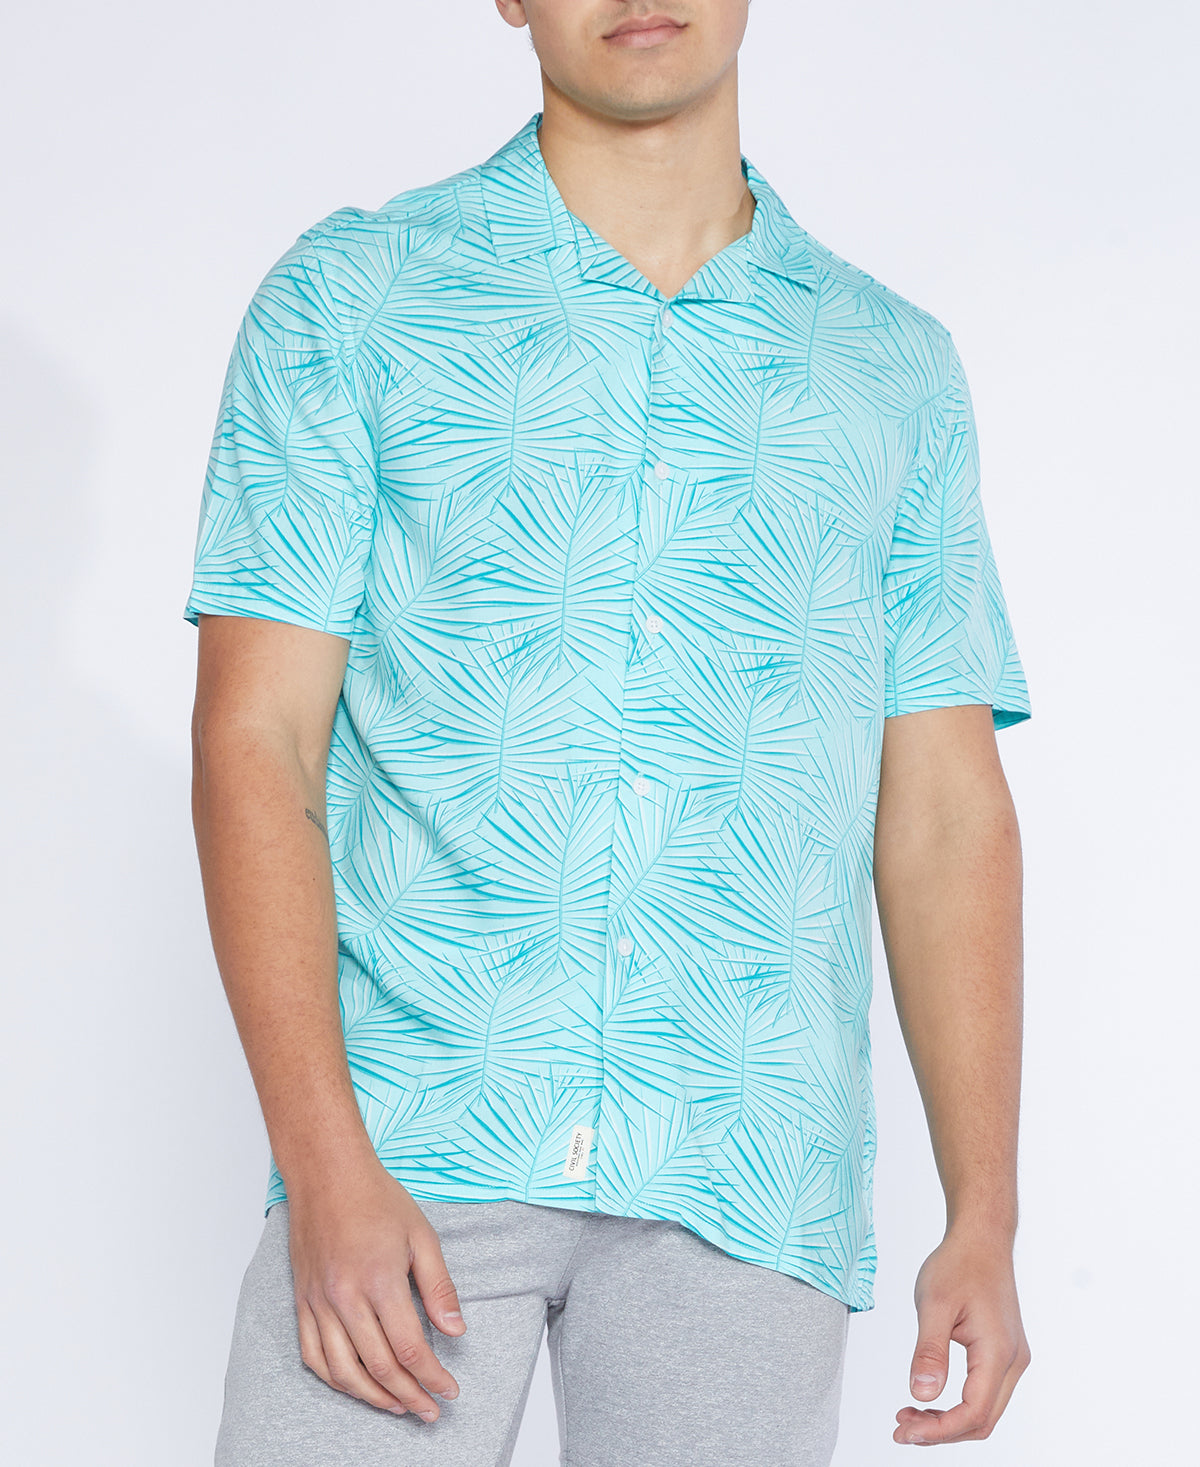 Printed SOCIETY CIVIL Shirt – Frond (Turquoise) Resort